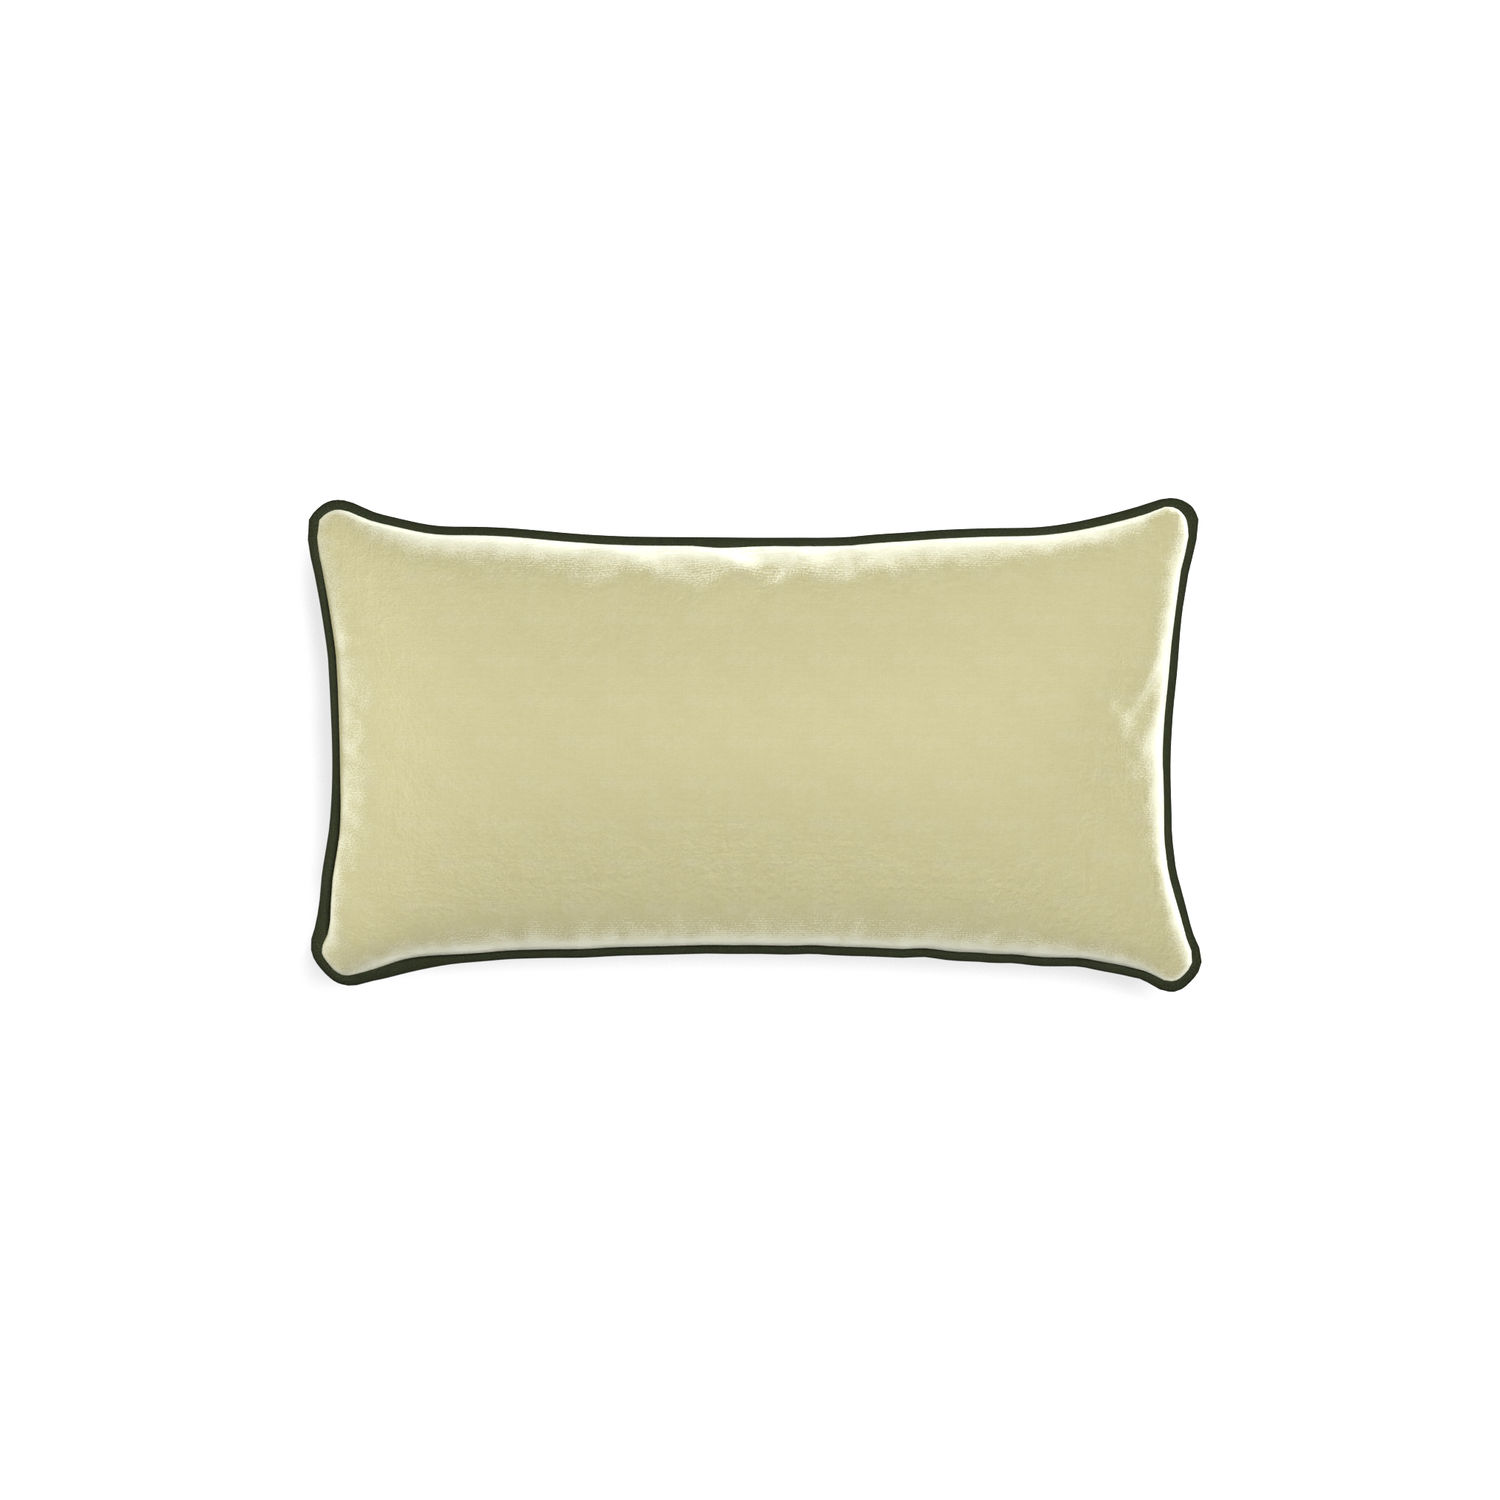 rectangle light green velvet pillow with fern green piping